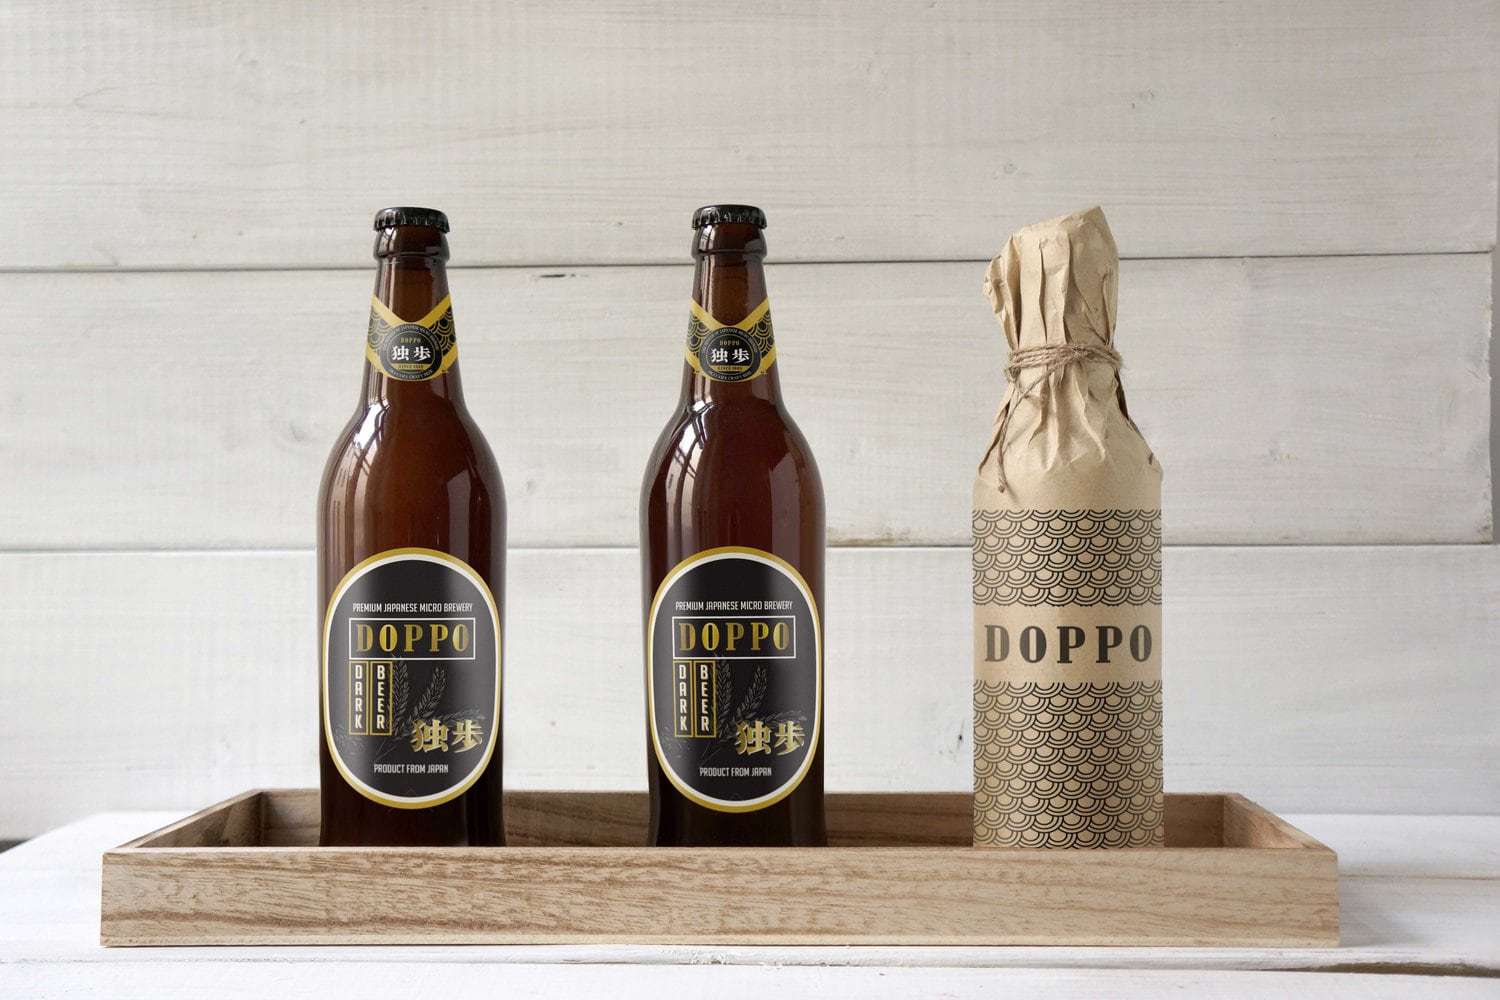 Packaging Design for Doppo beer from Okayama Japan